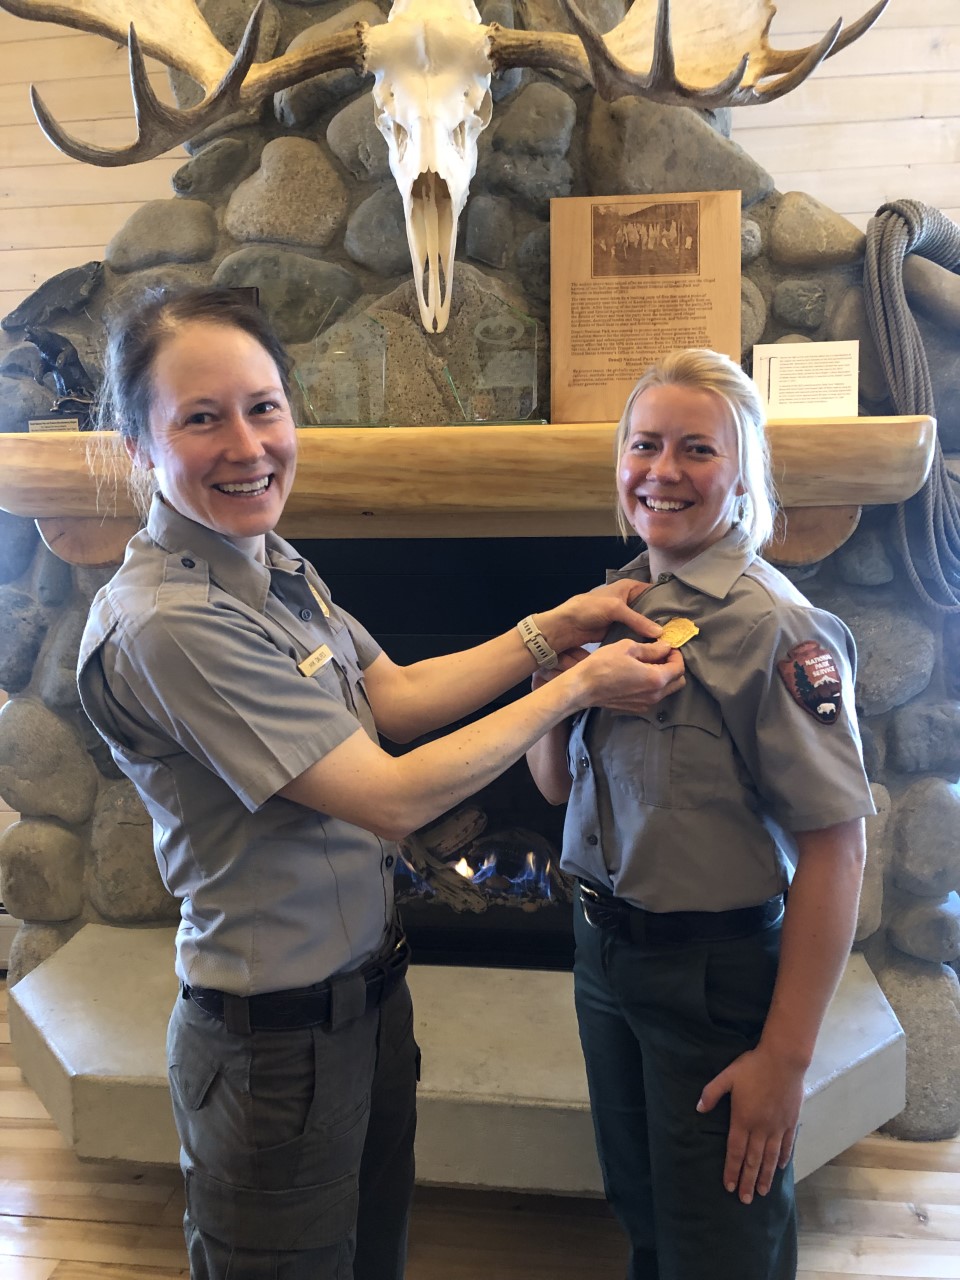 A woman in park ranger uniform pins a gold badge on another woman in a ranger uniform in front of a stone fireplace.